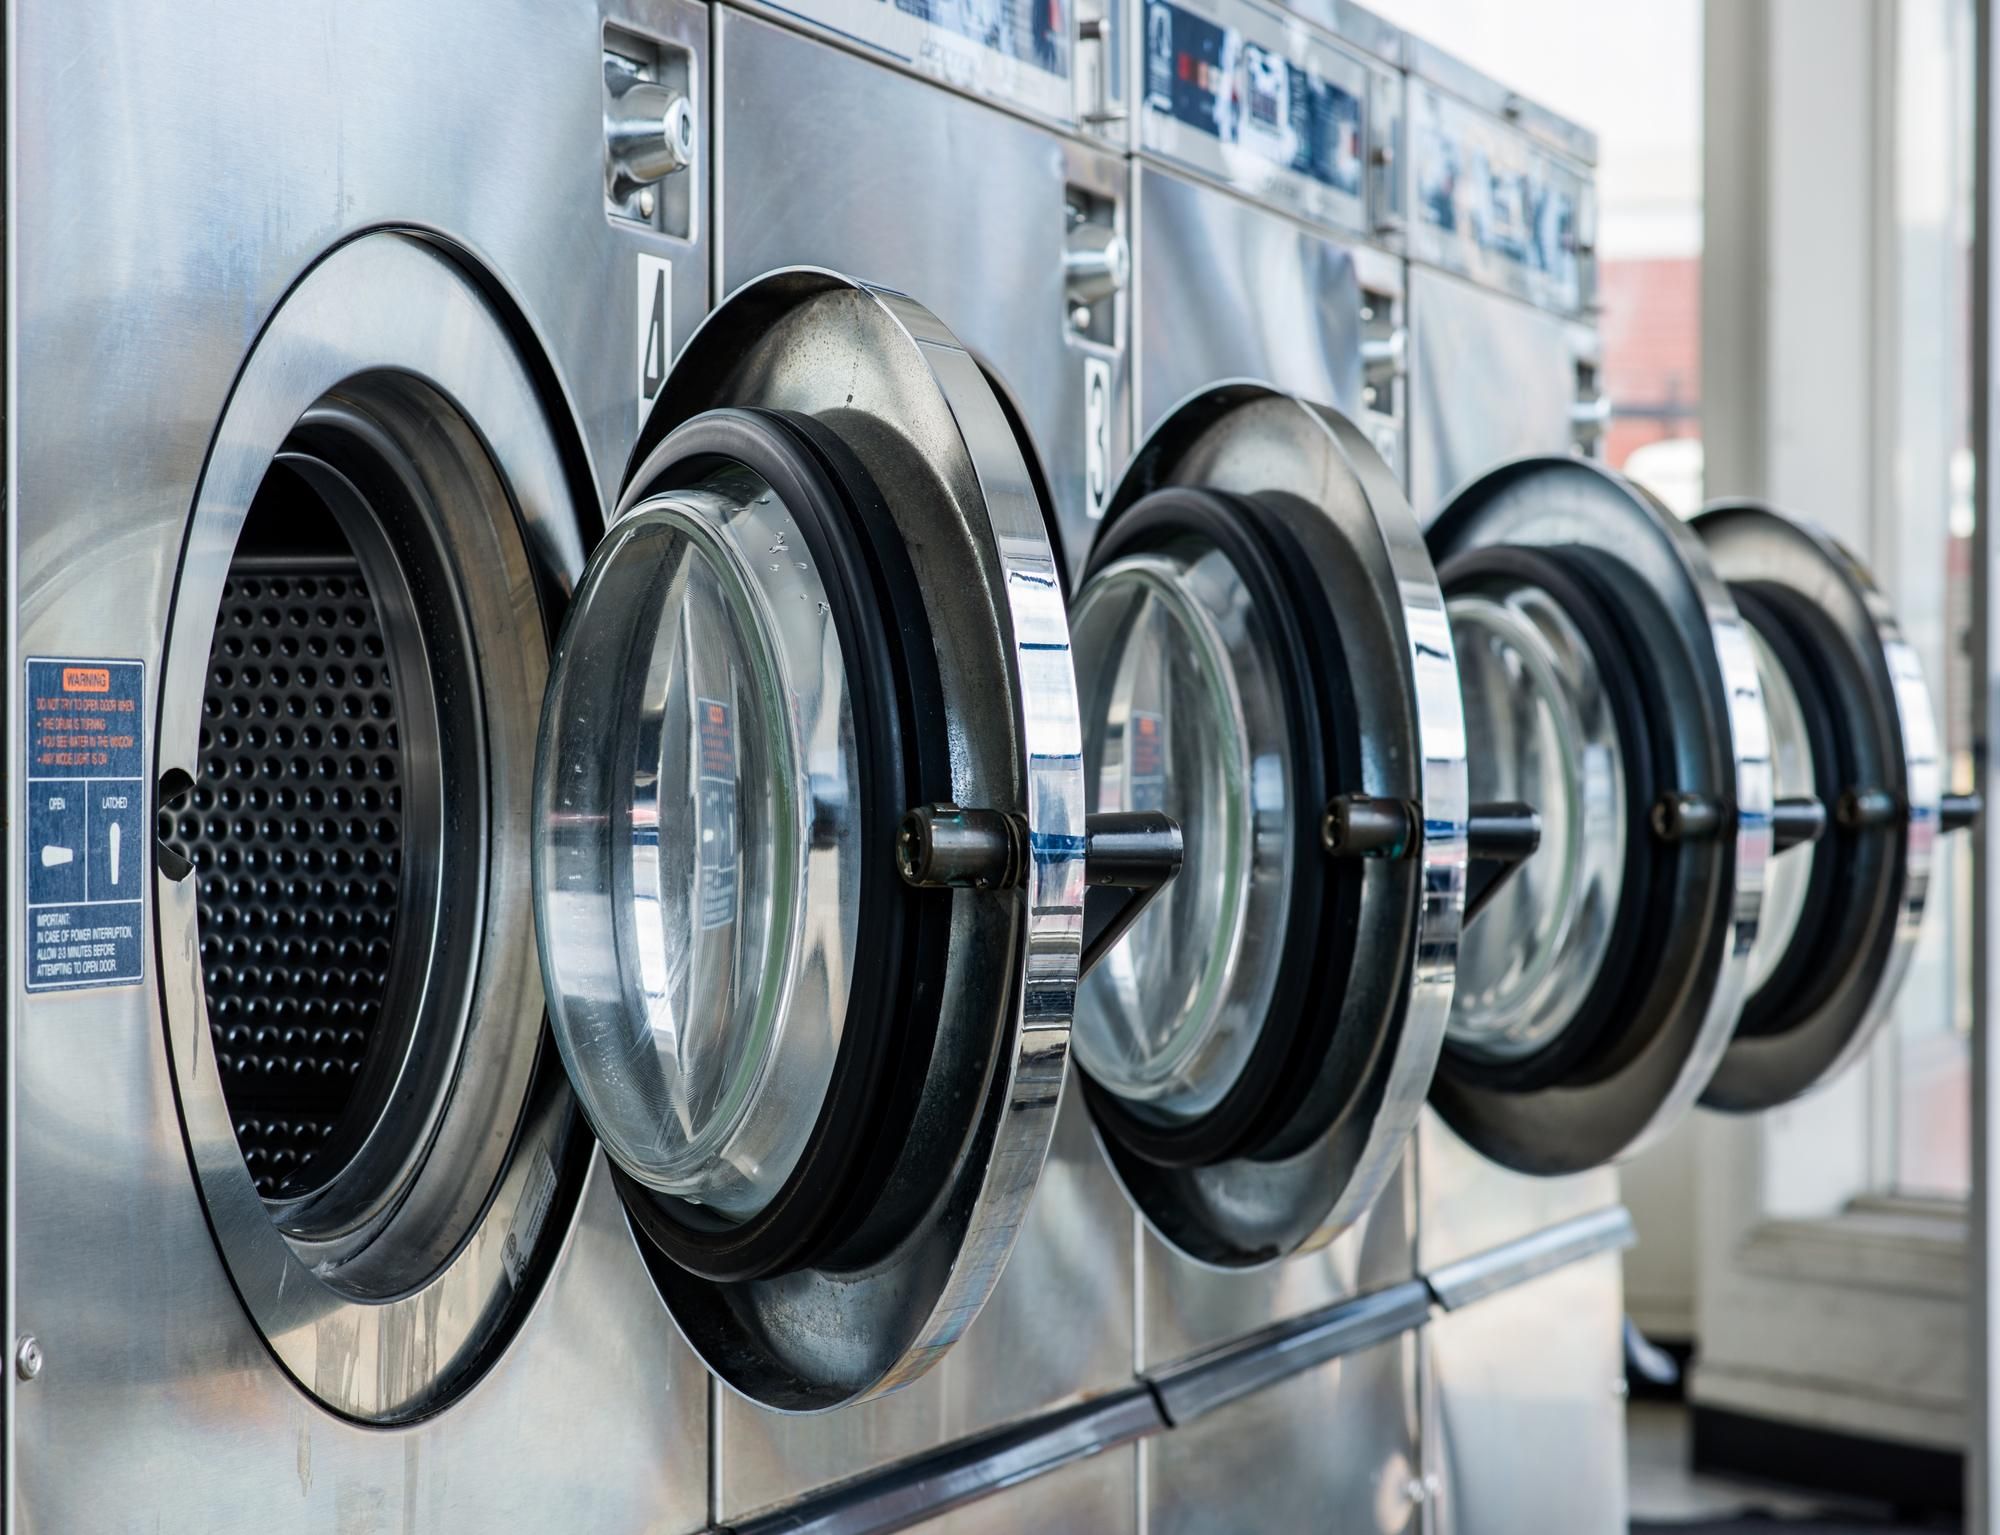 UK laundry detergent Ecover recalled over burn wanring